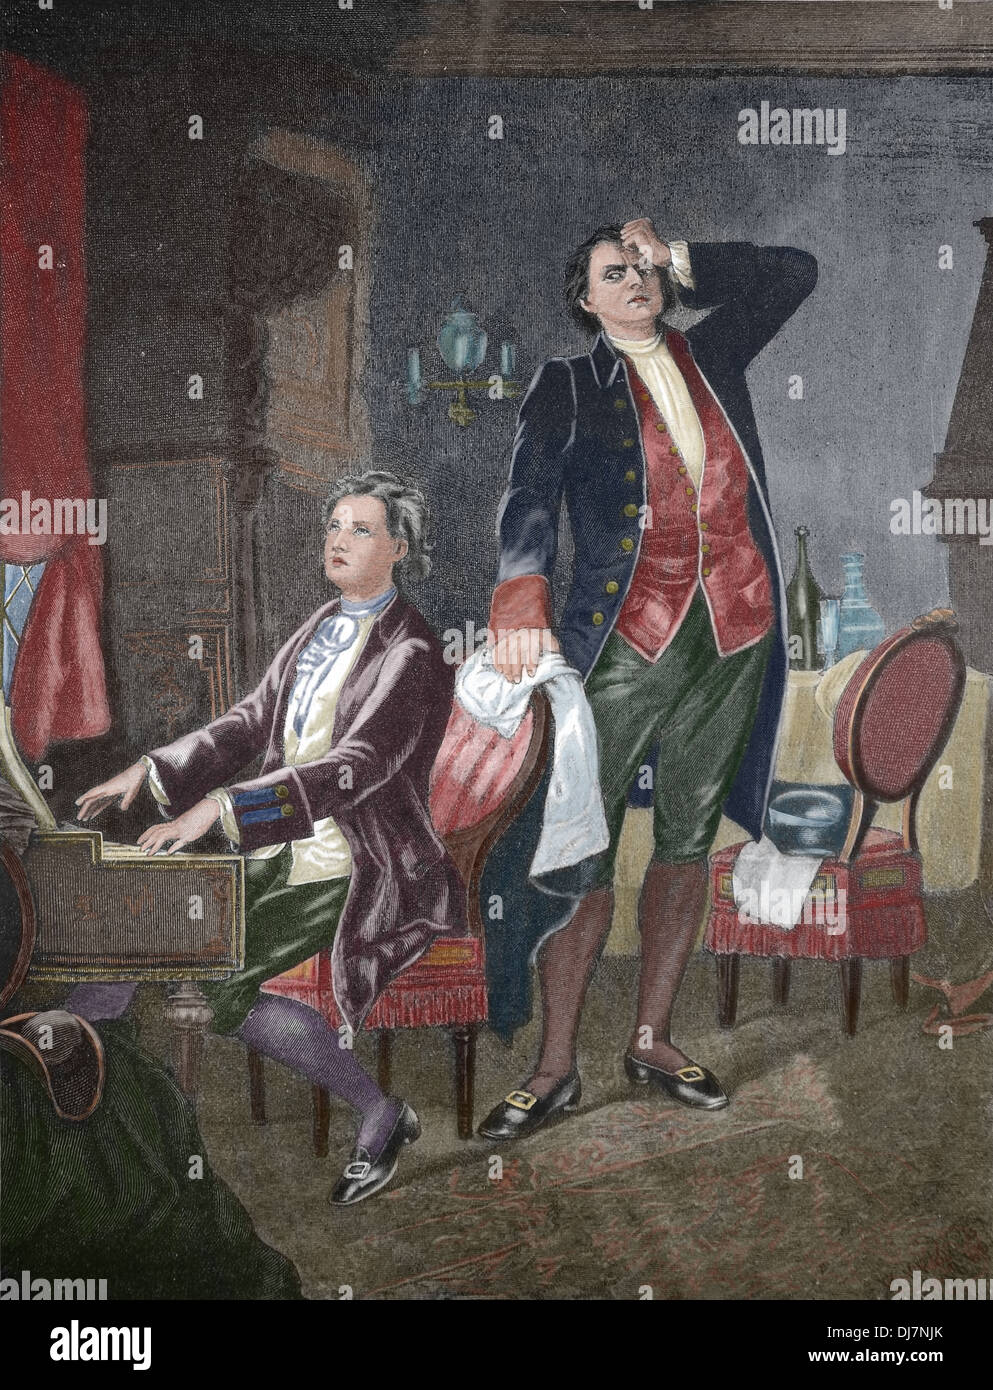 Wolfgang Amadeus Mozart (1756-1791) and Antonio Salieri (1750-1825). Colored engraving. Stock Photo